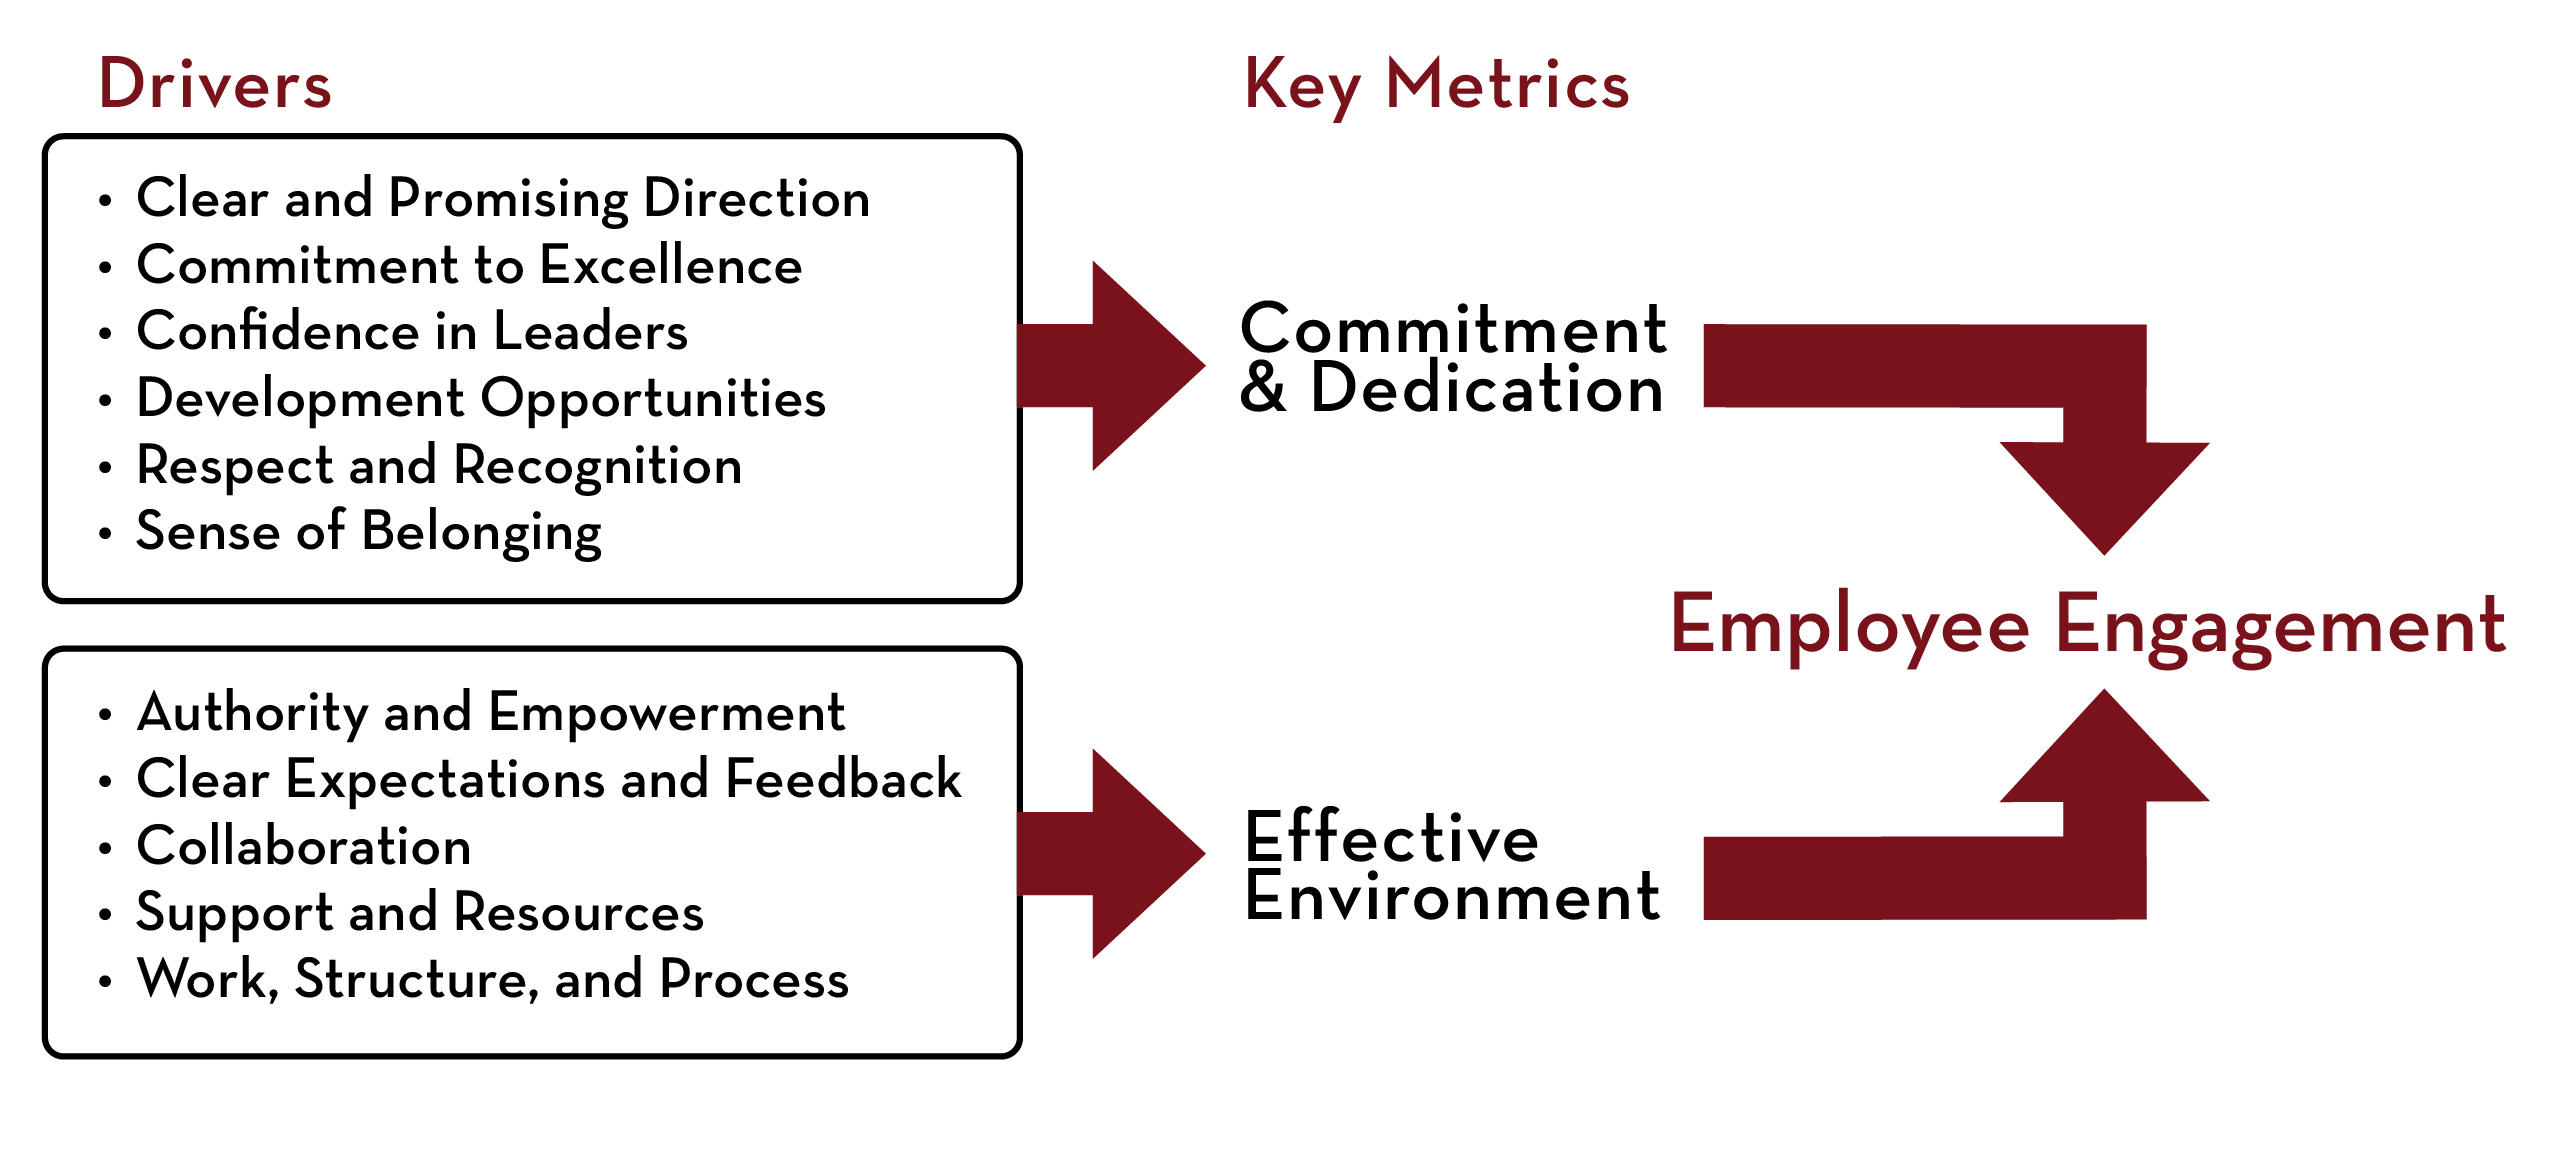 Drivers, Key Metrics, and Employee Engagement